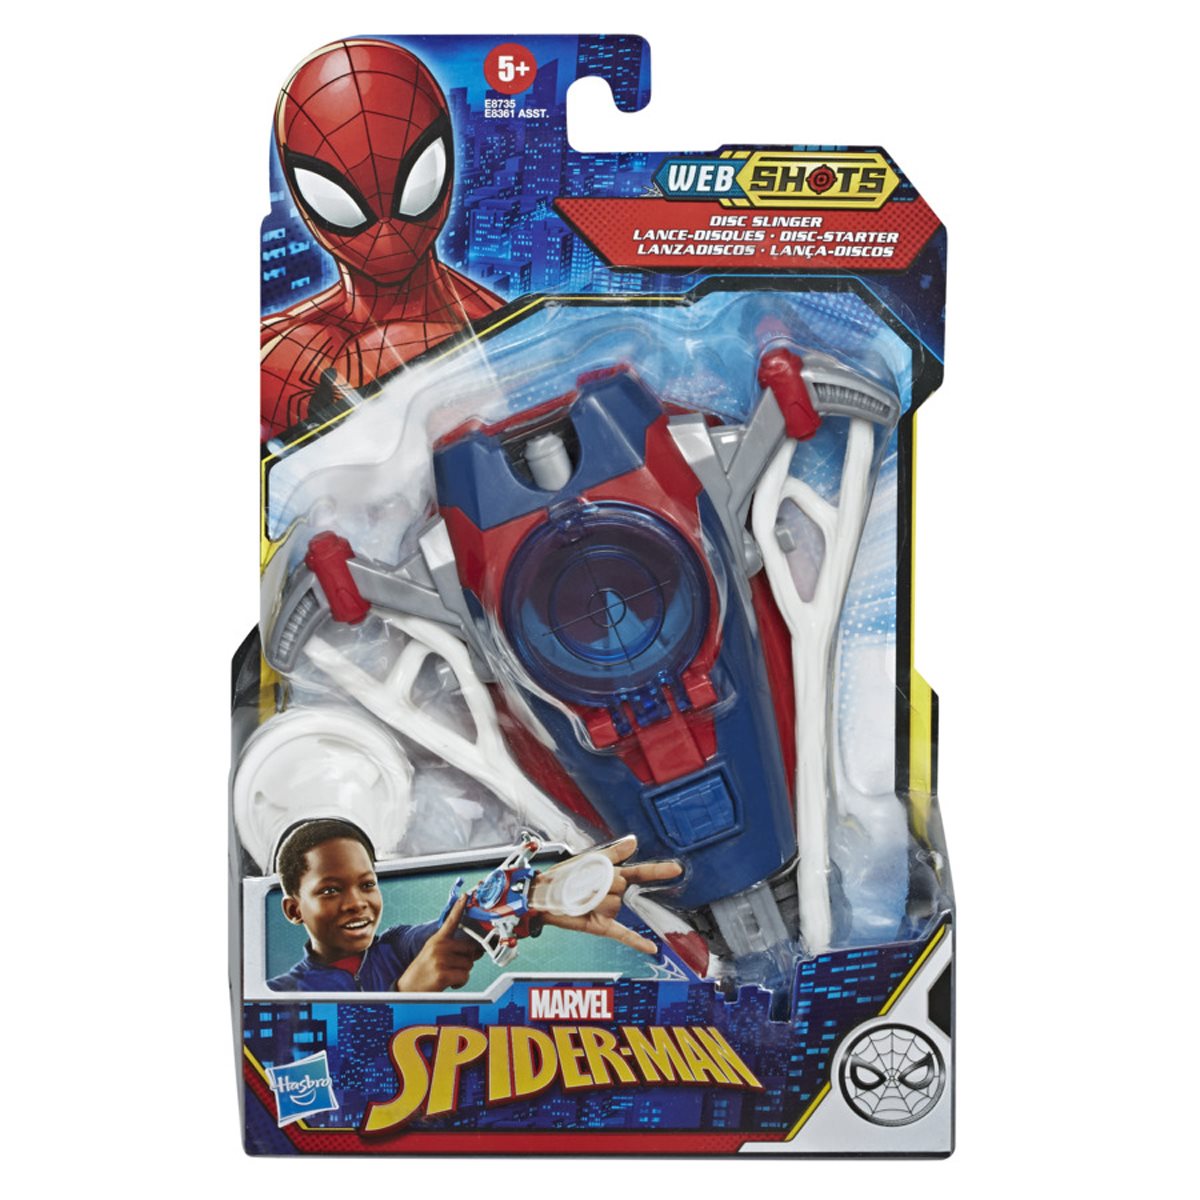 Spider-Man Web Shots Gear Disc Slinger Blaster Toy